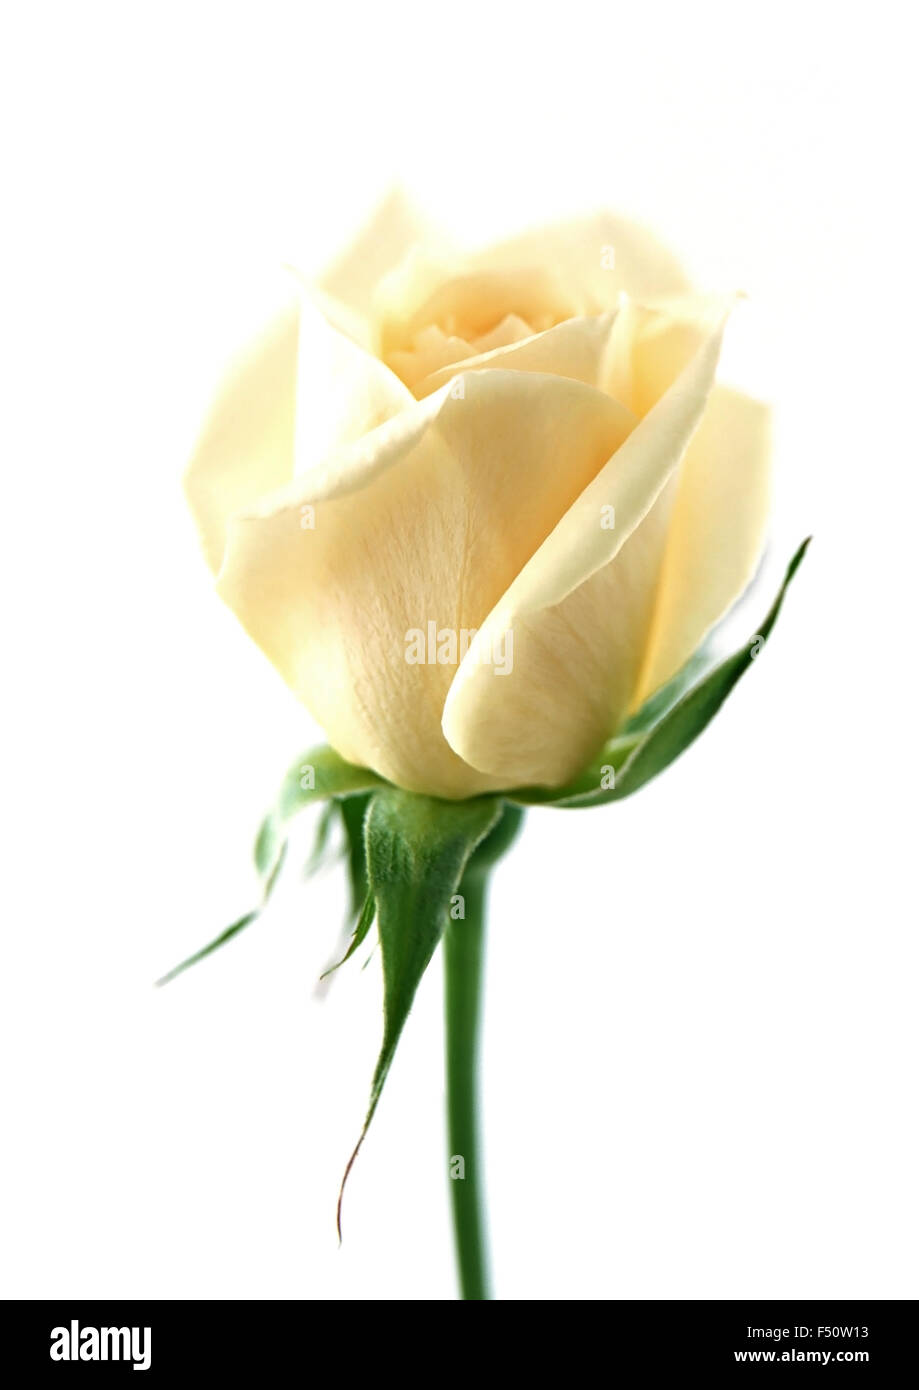 Light yellow rose flower on white background Stock Photo